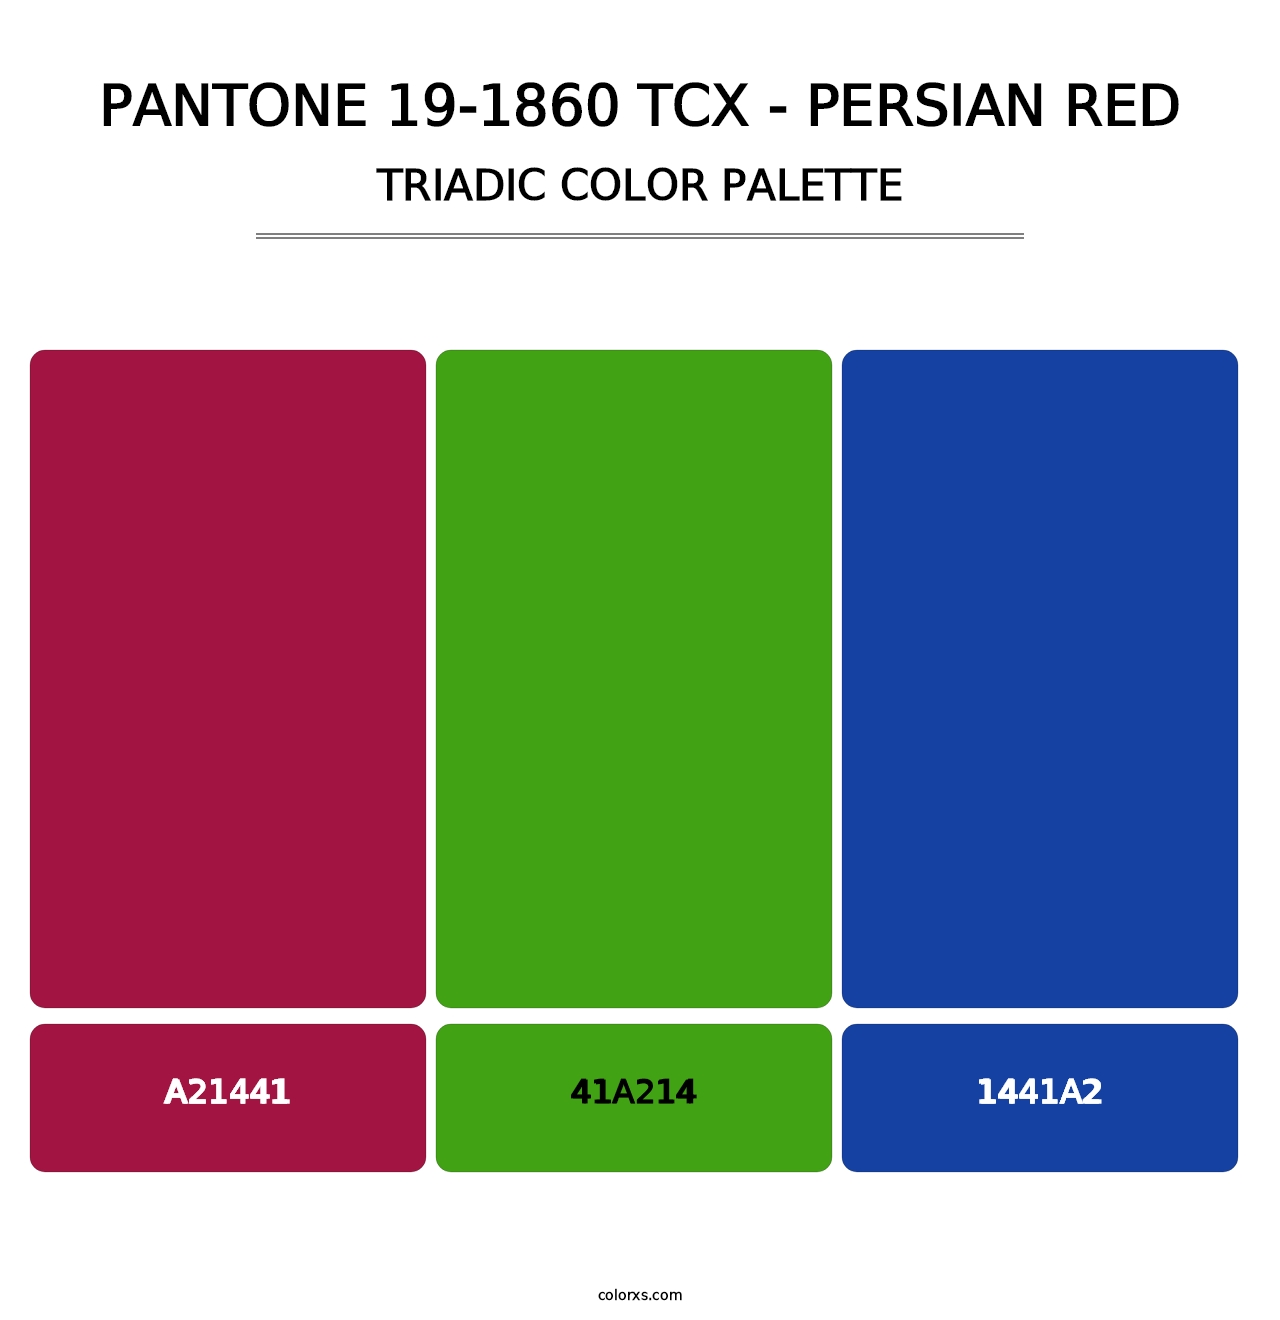 PANTONE 19-1860 TCX - Persian Red - Triadic Color Palette